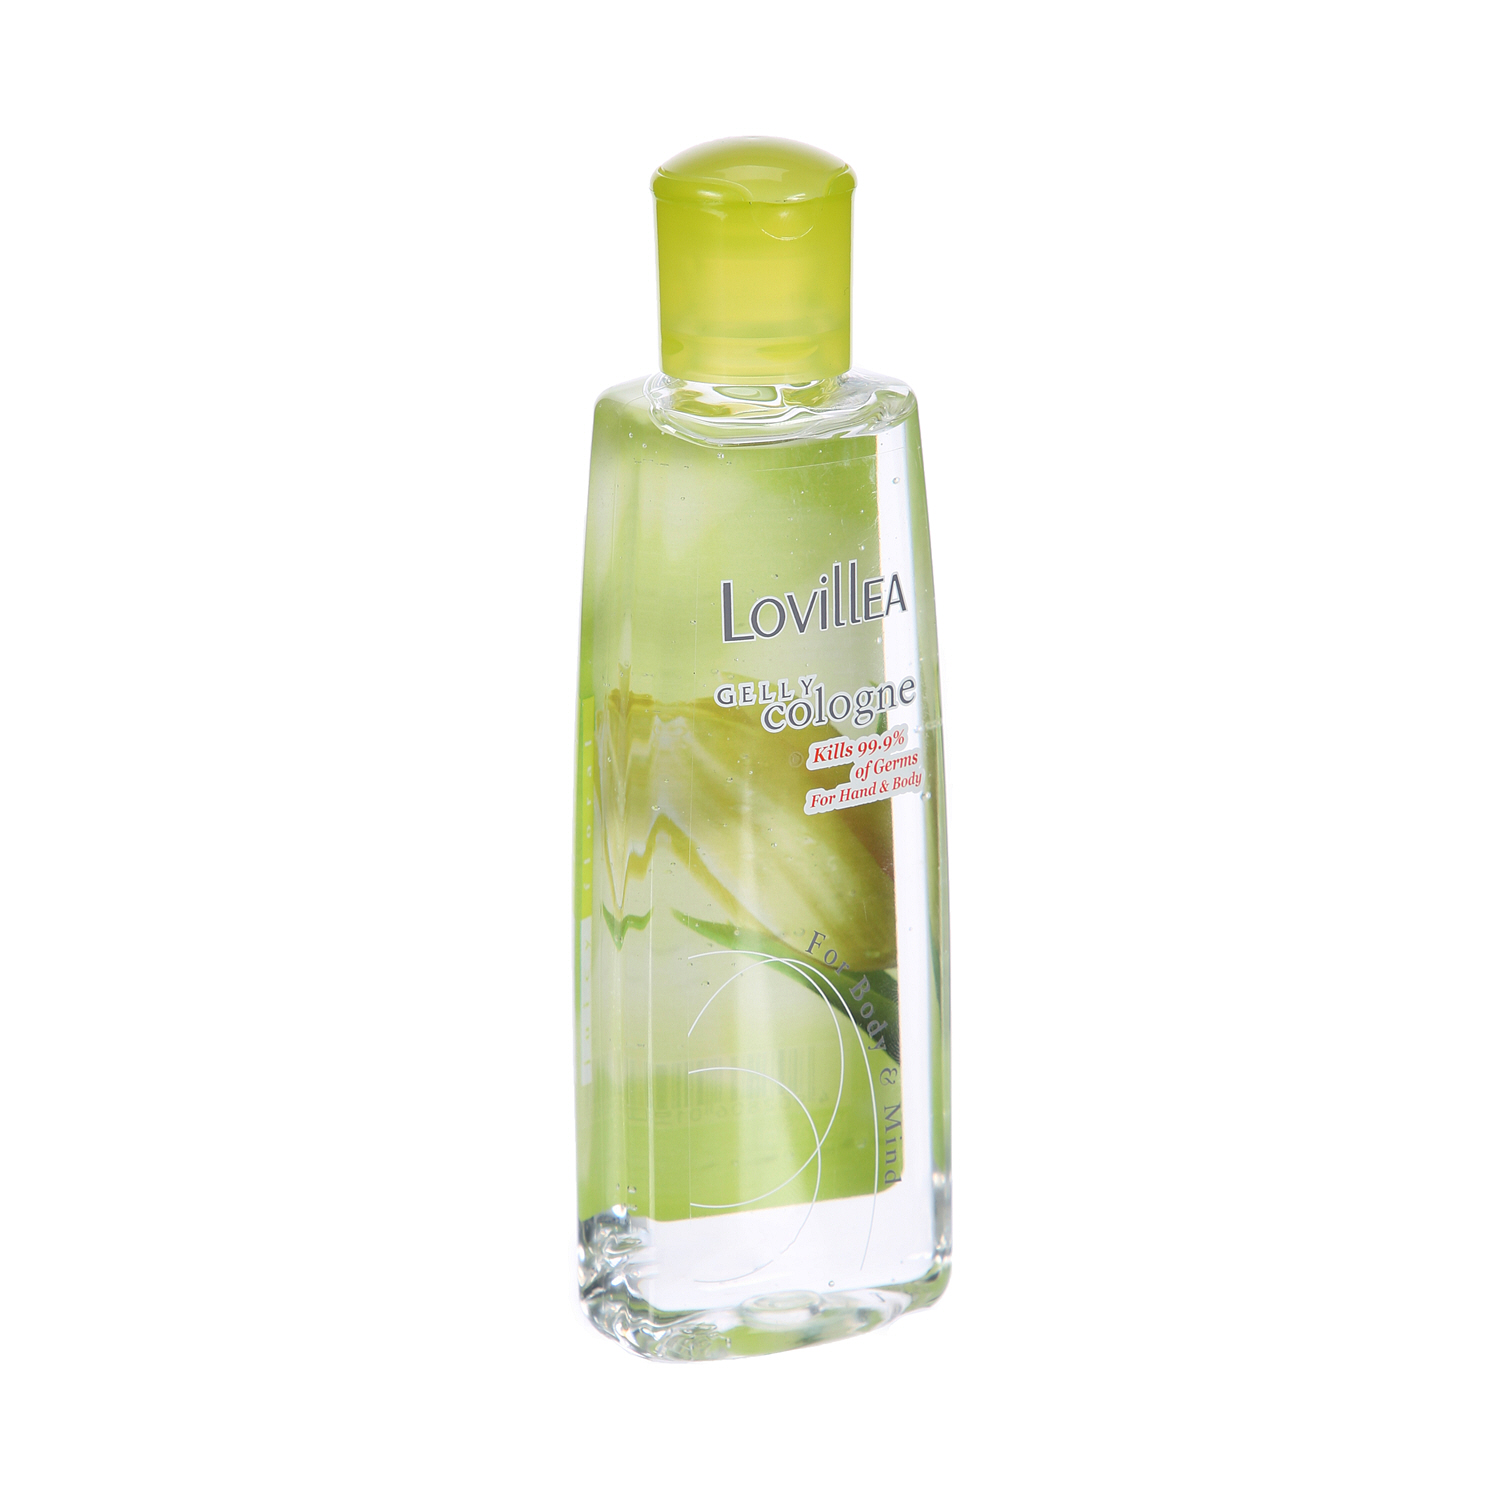 Lovillea Gelly Cologne Juicy Floral Perfume 200ml